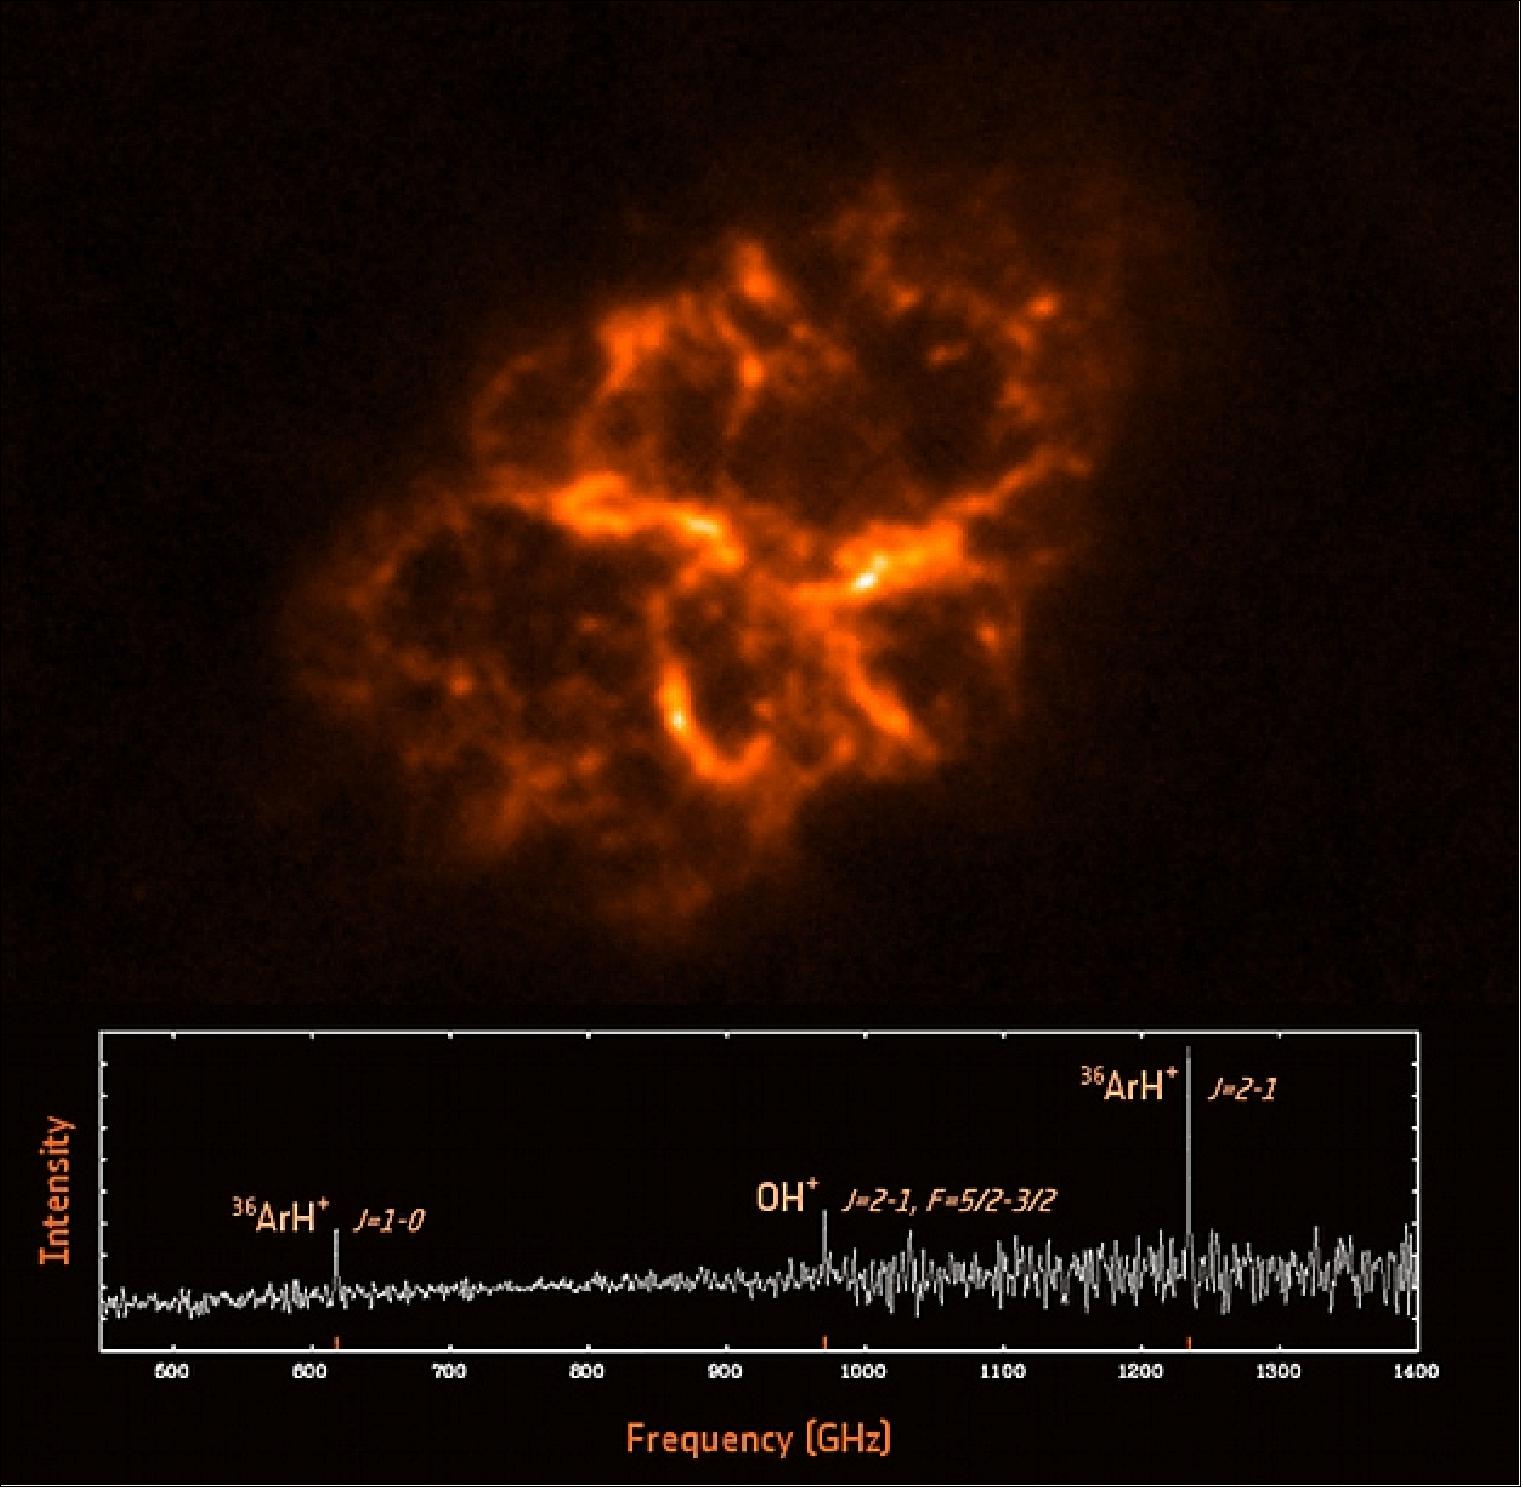 Figure 63: Herschel image of the Crab Nebula with emission lines from argon hydride in its spectrum (image credit: ESA/Herschel/PACS, SPIRE/MESS Key Program Supernova Remnant Team)